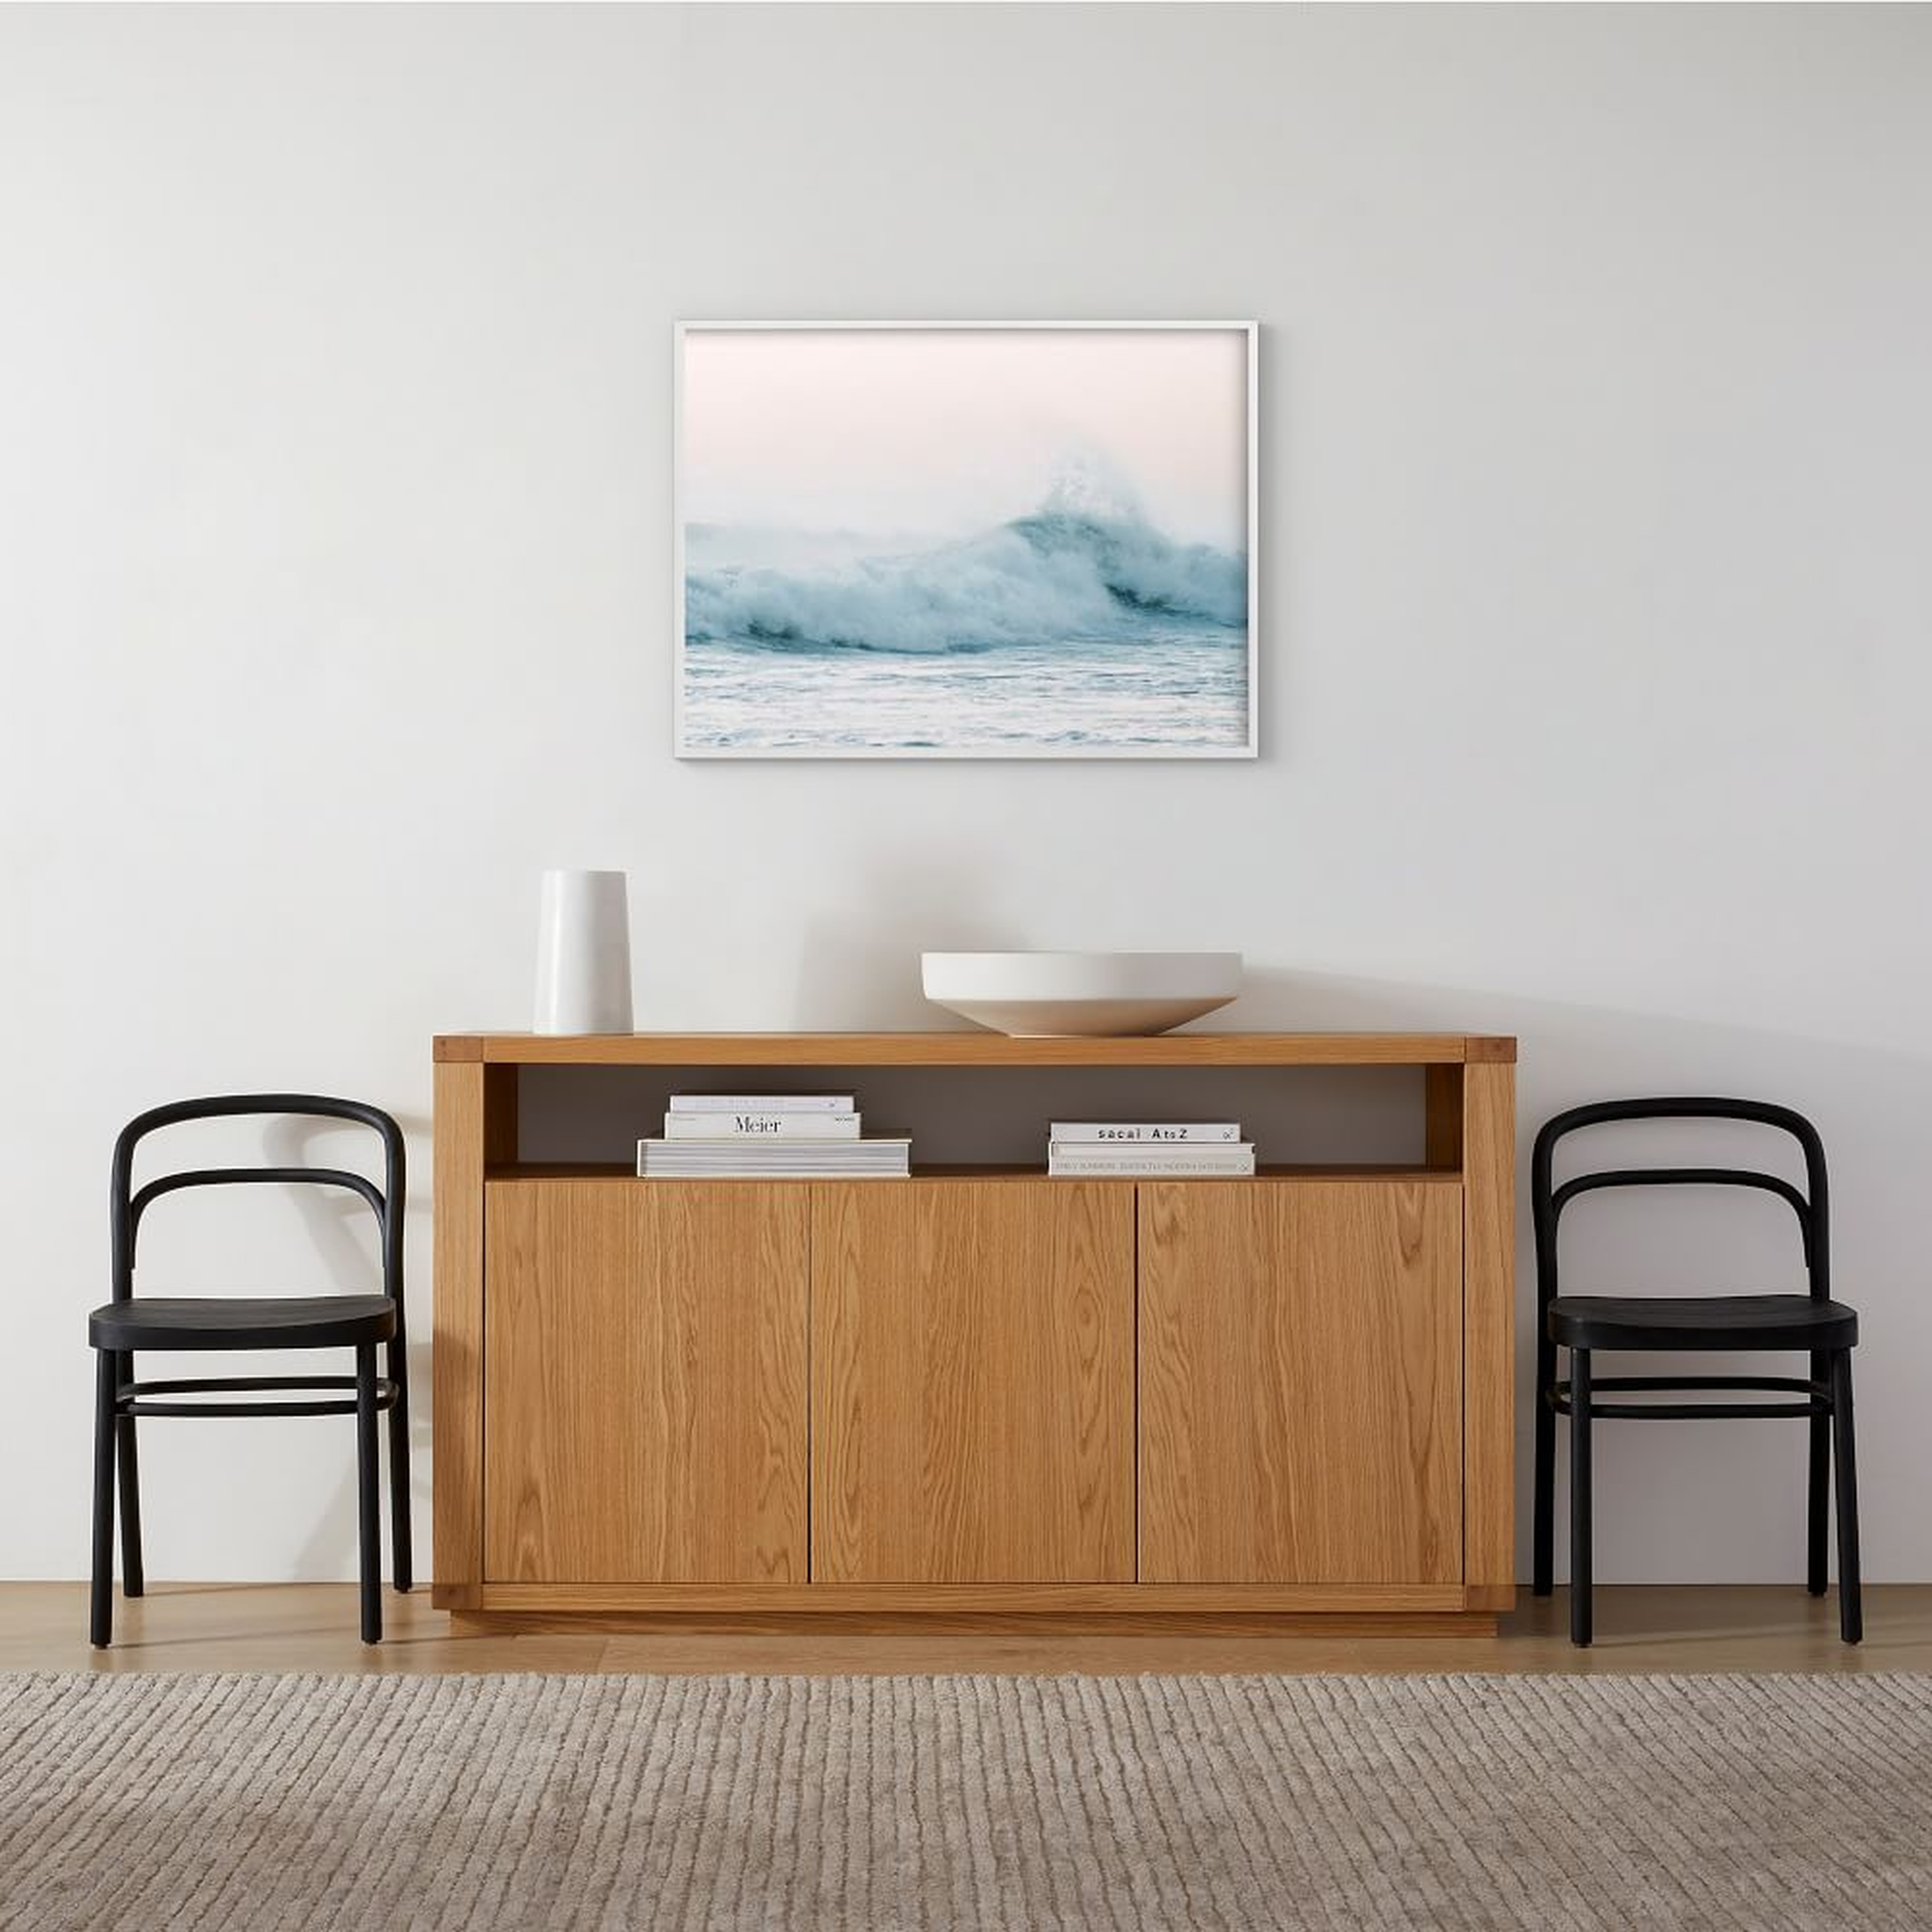 Playa Negra by Kaitlin Rebesco, White Wood Frame, 40"x30" - West Elm